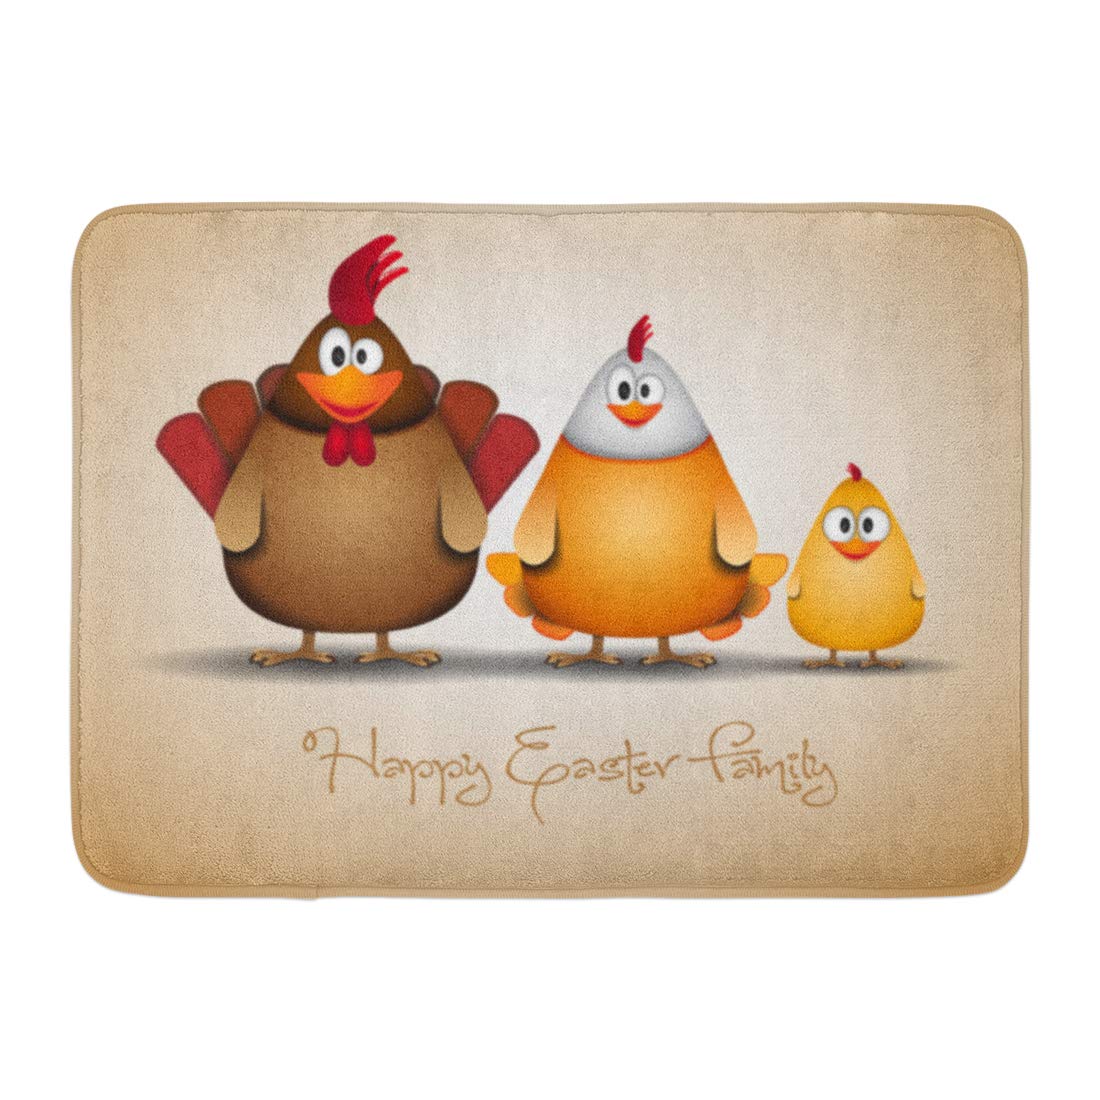 GODPOK Egg Red Cartoon Happy Easter Funny Chicken Family Yellow Hen Cute Rug Doormat Bath Mat 23.6x15.7 inch - image 1 of 1